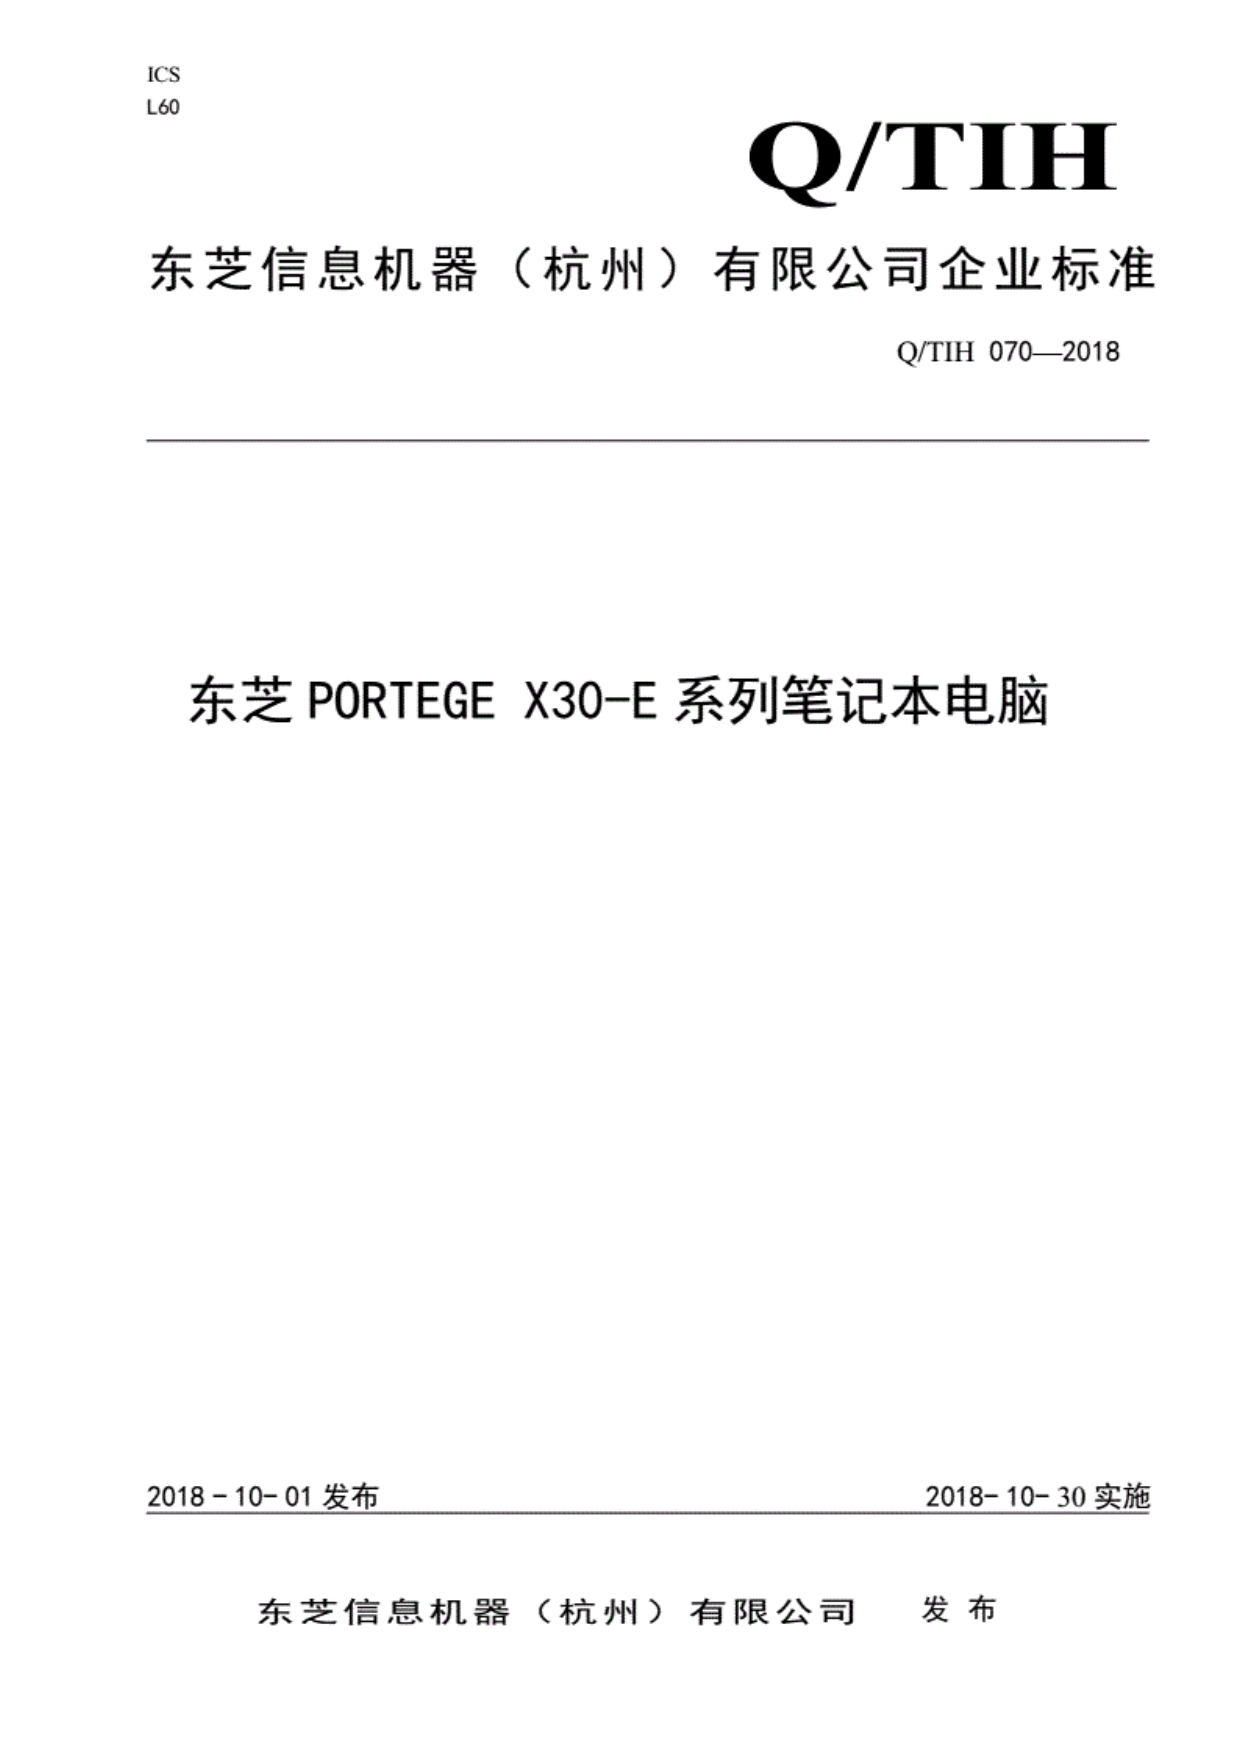 Q_TIH070-2018东芝PORTEGEX30-E系列笔记本电脑._第1页